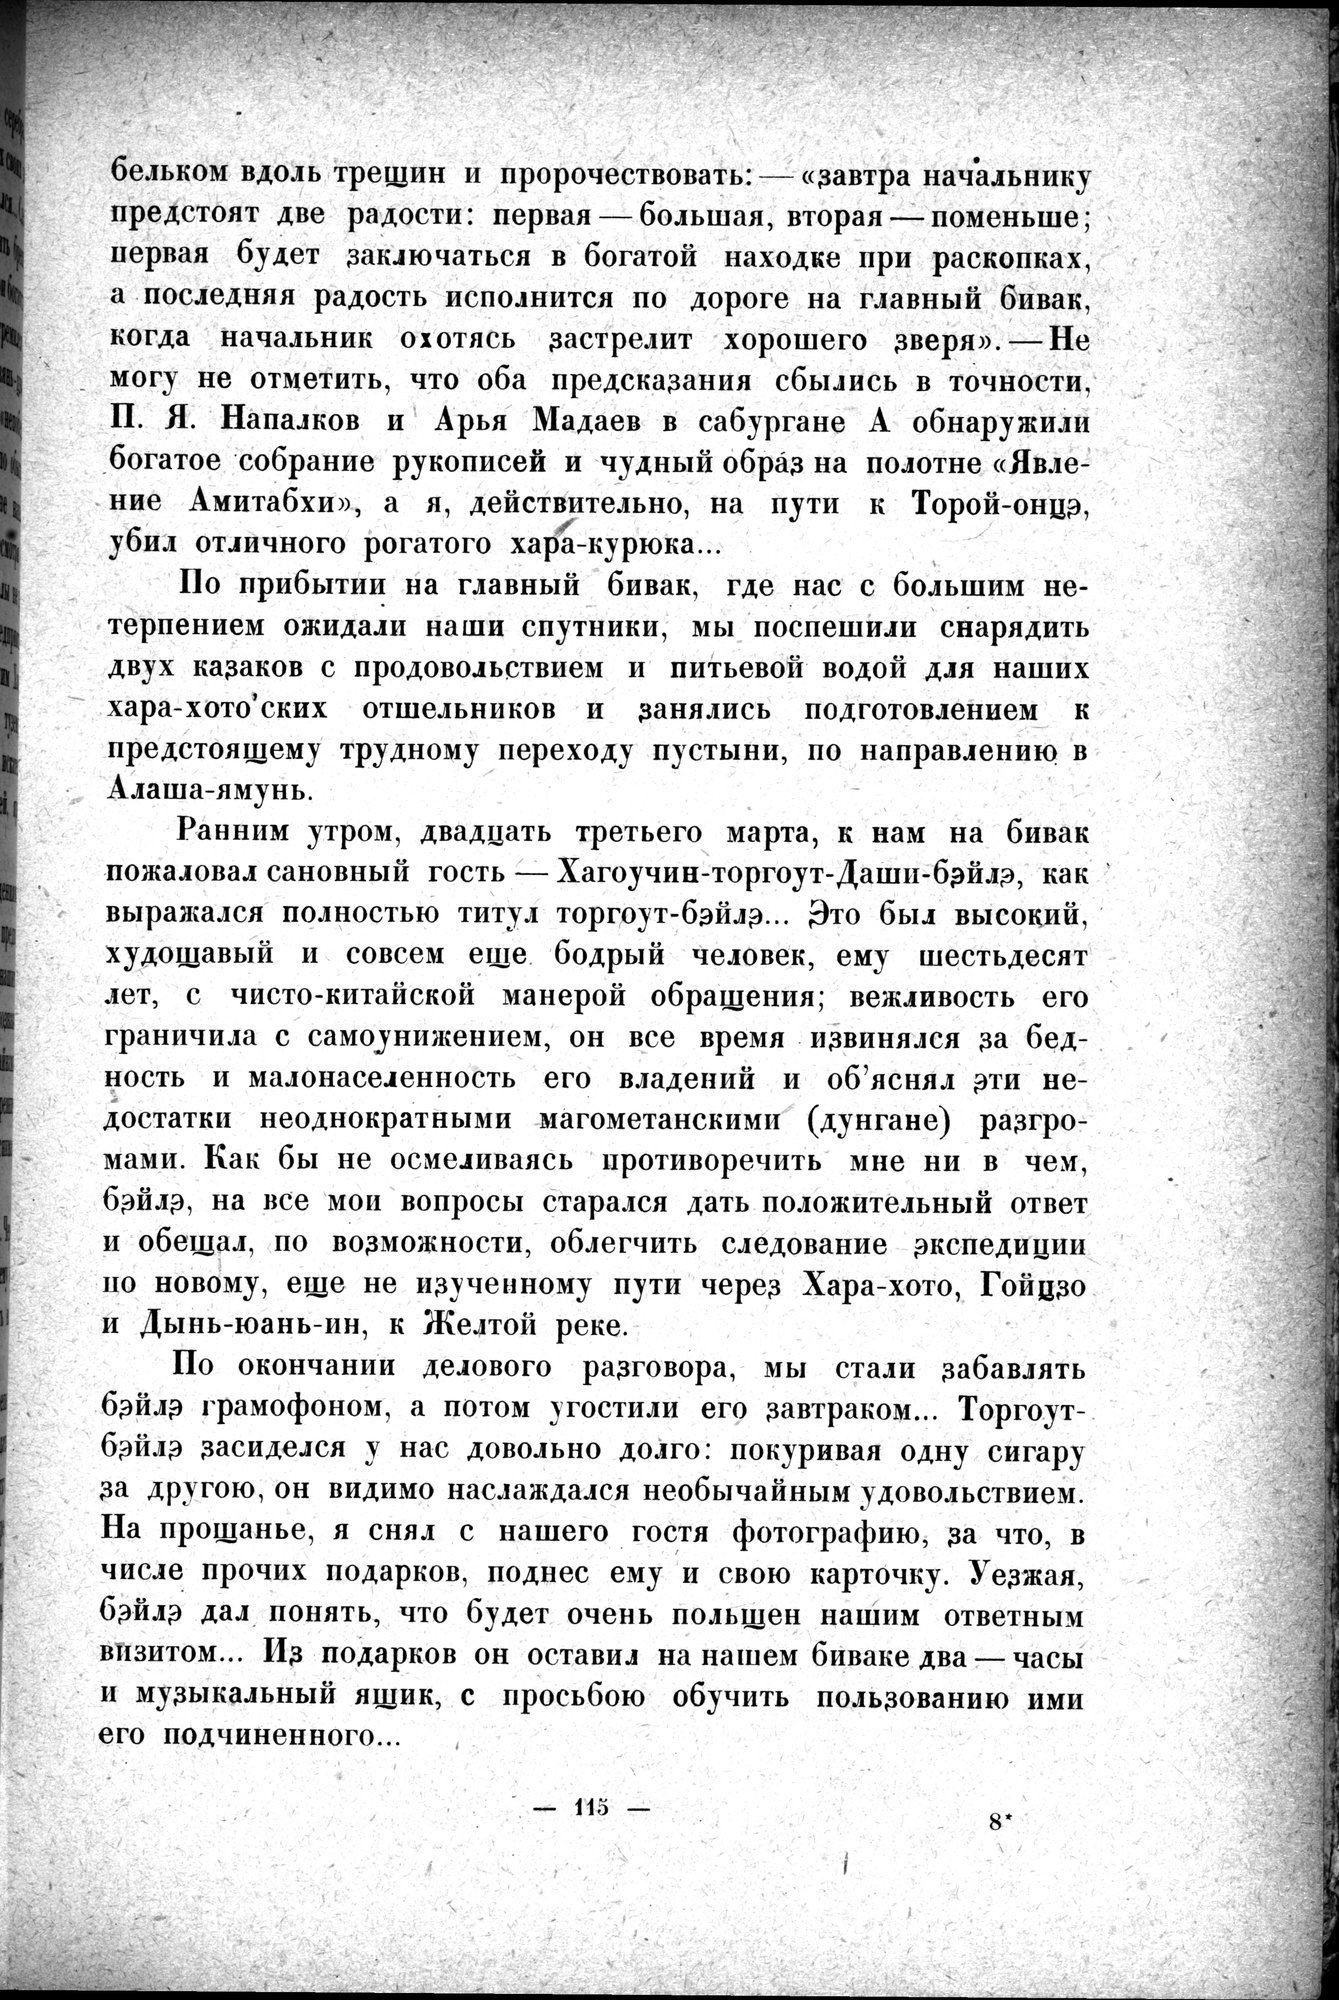 Mongoliya i Amdo i mertby gorod Khara-Khoto : vol.1 / Page 141 (Grayscale High Resolution Image)